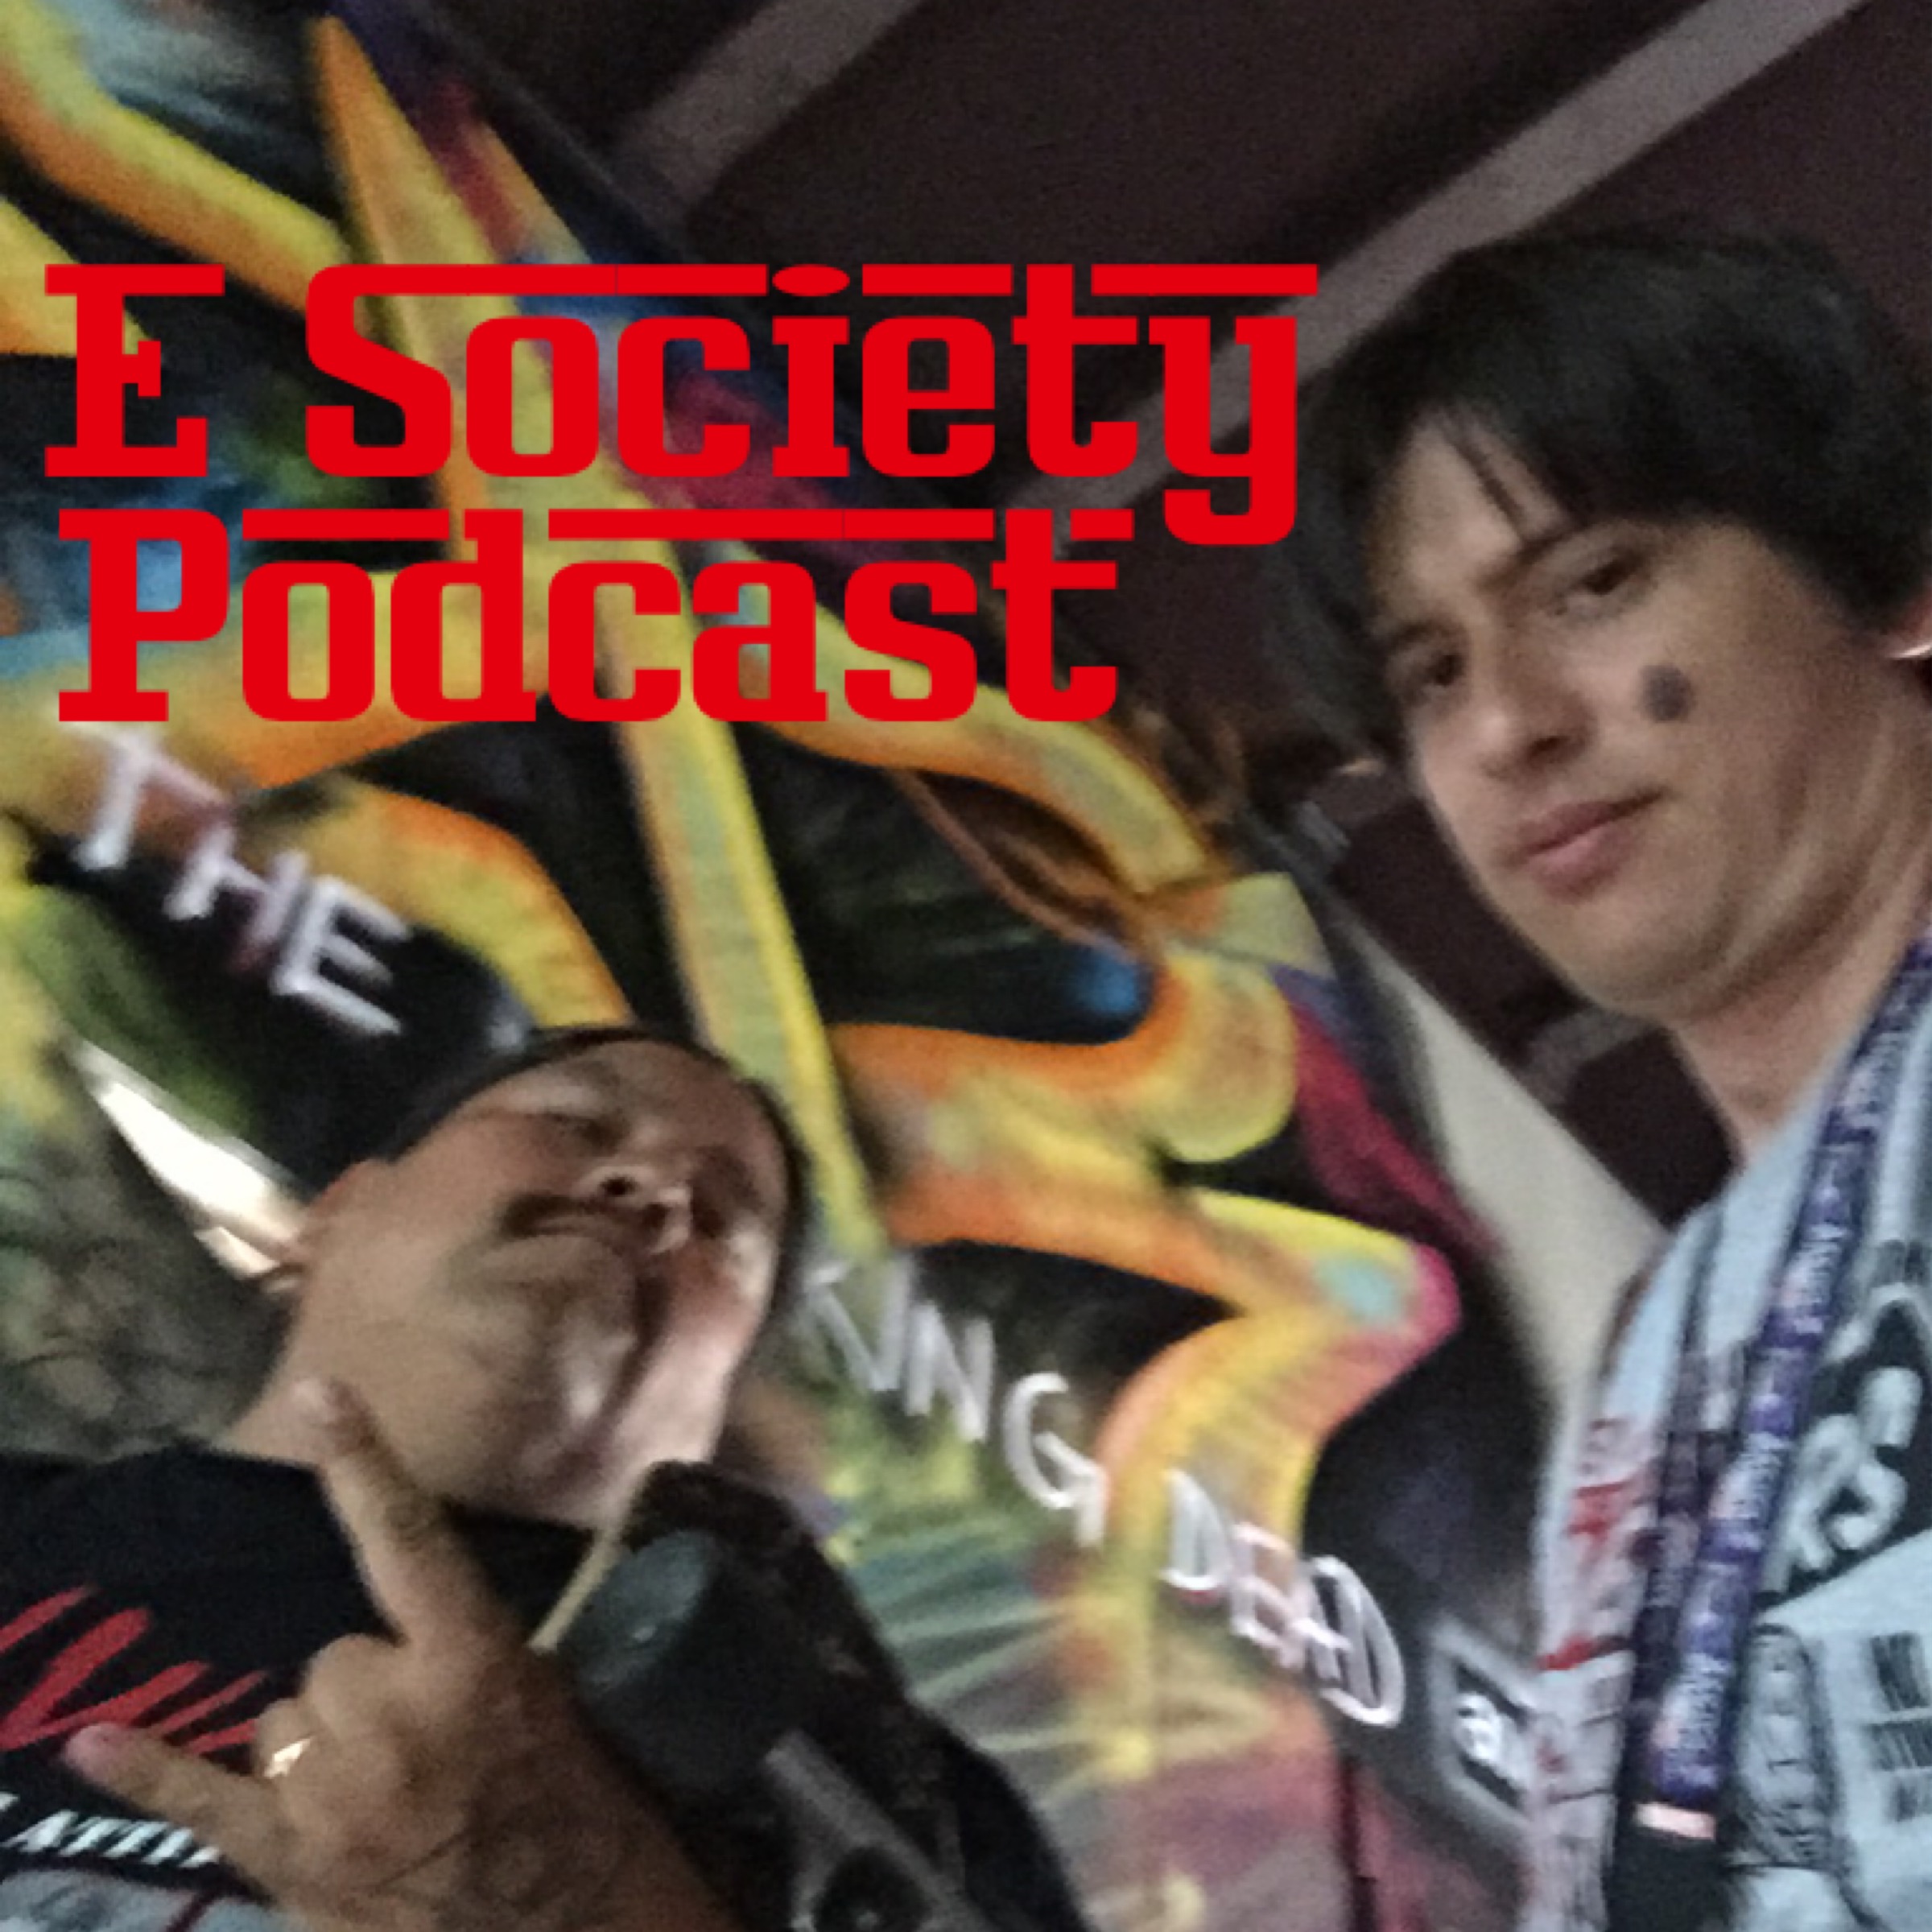 E Society Podcast - Ep. 14: Friendly Neighborhood Podcasters